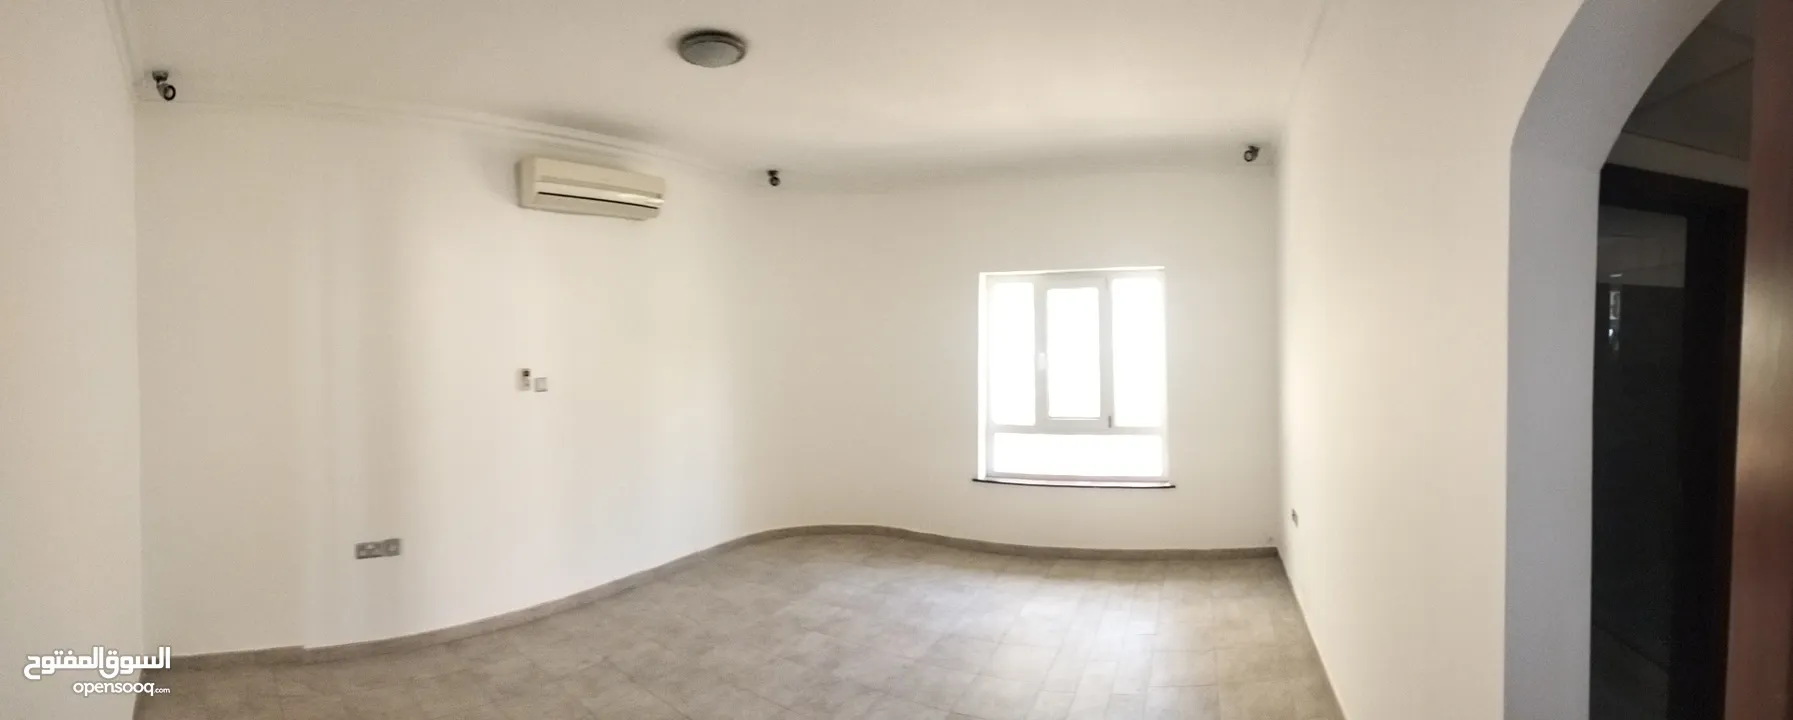 Villa for rent in Al Azaiba 18 November